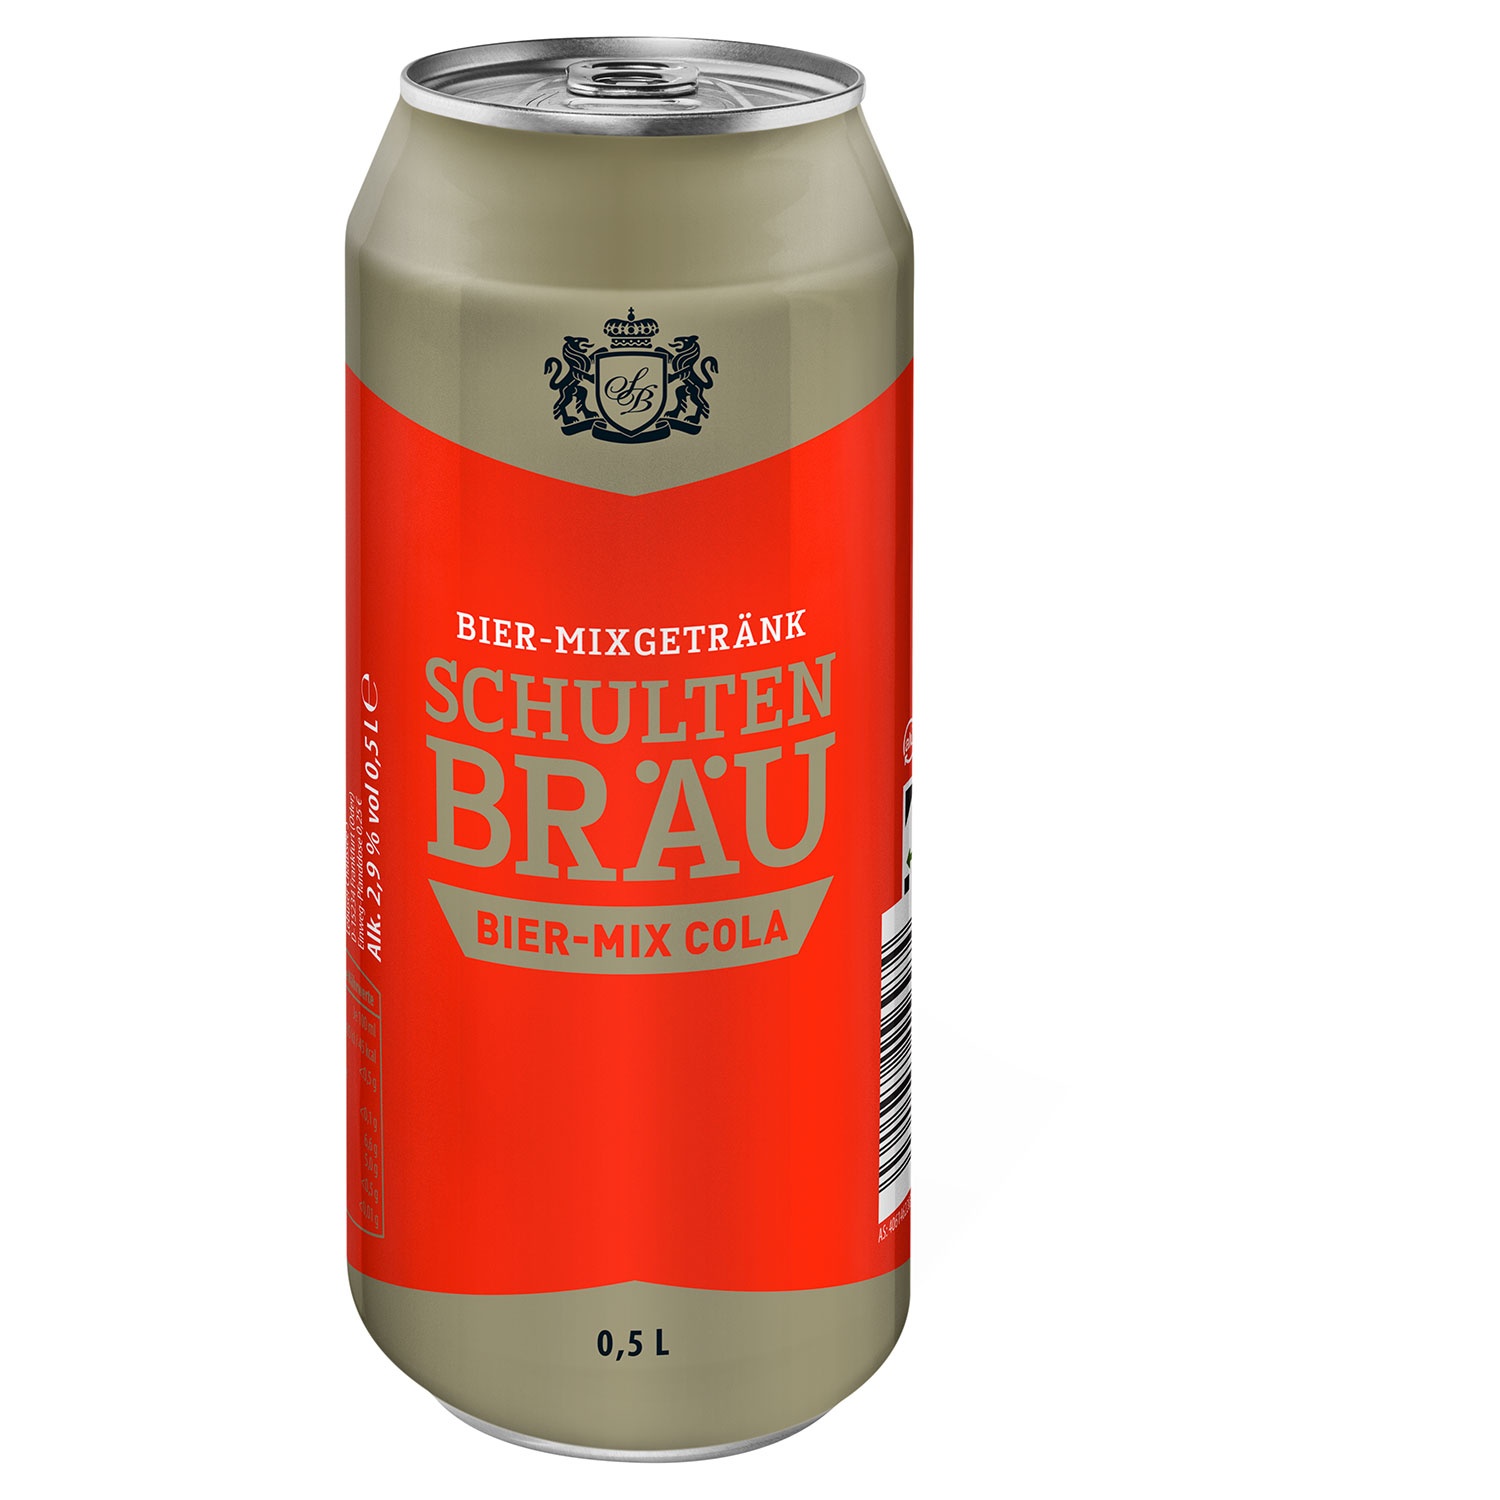 SCHULTENBRÄU Bier-Mix Cola Dose 0,5 l